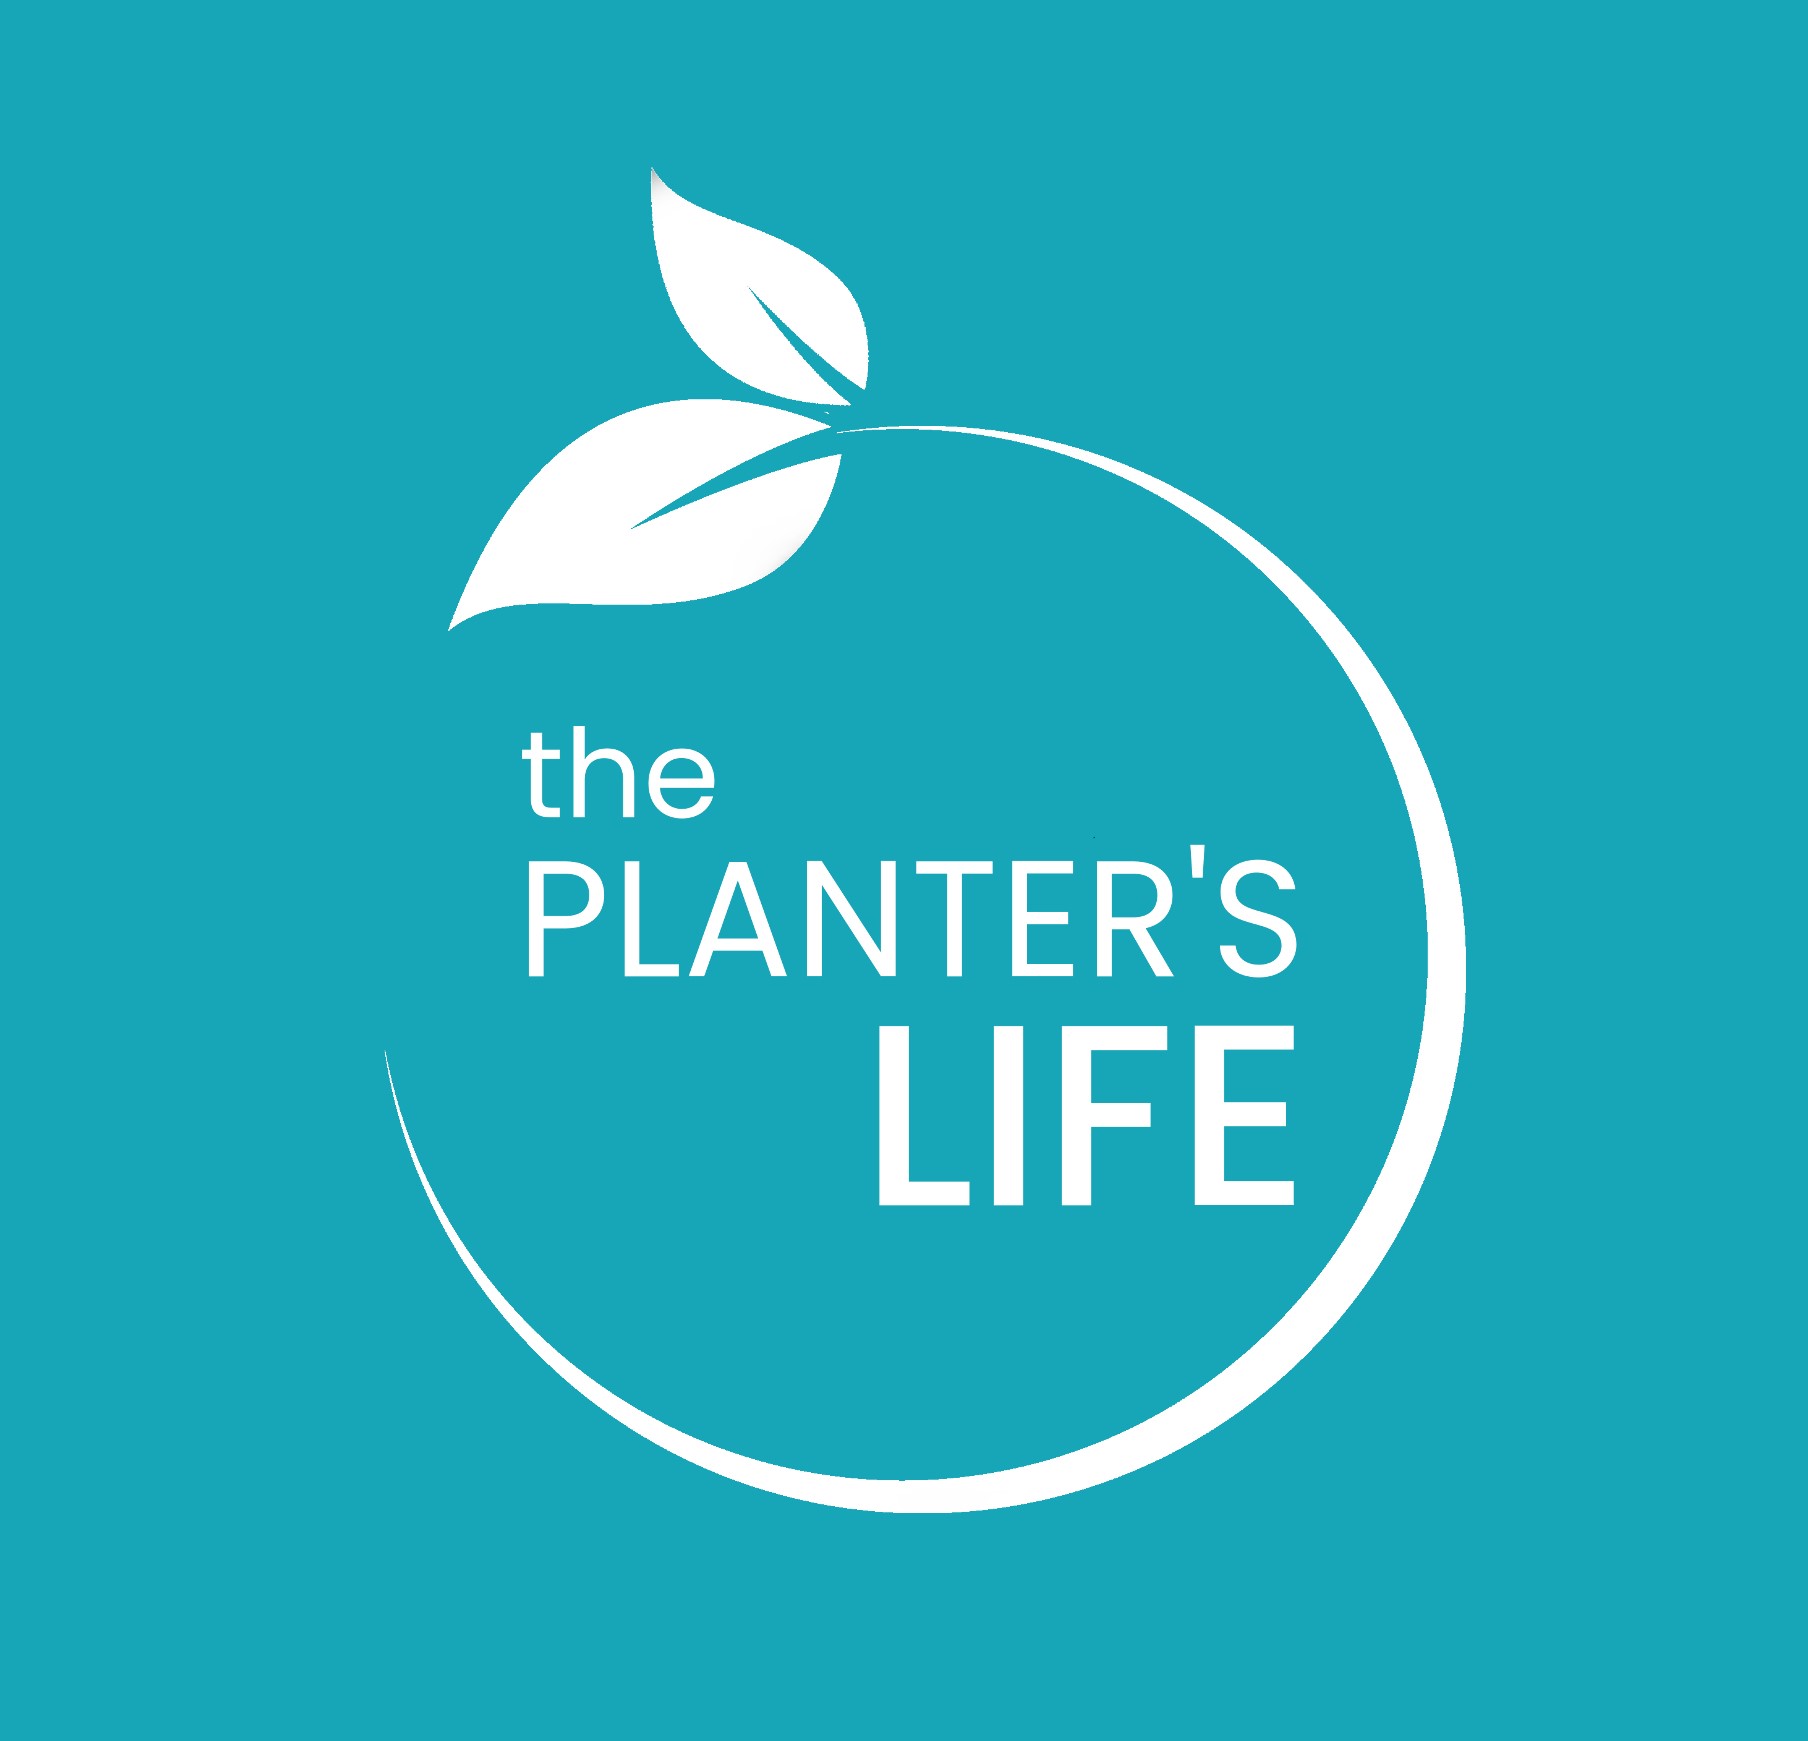 The Planter's Life